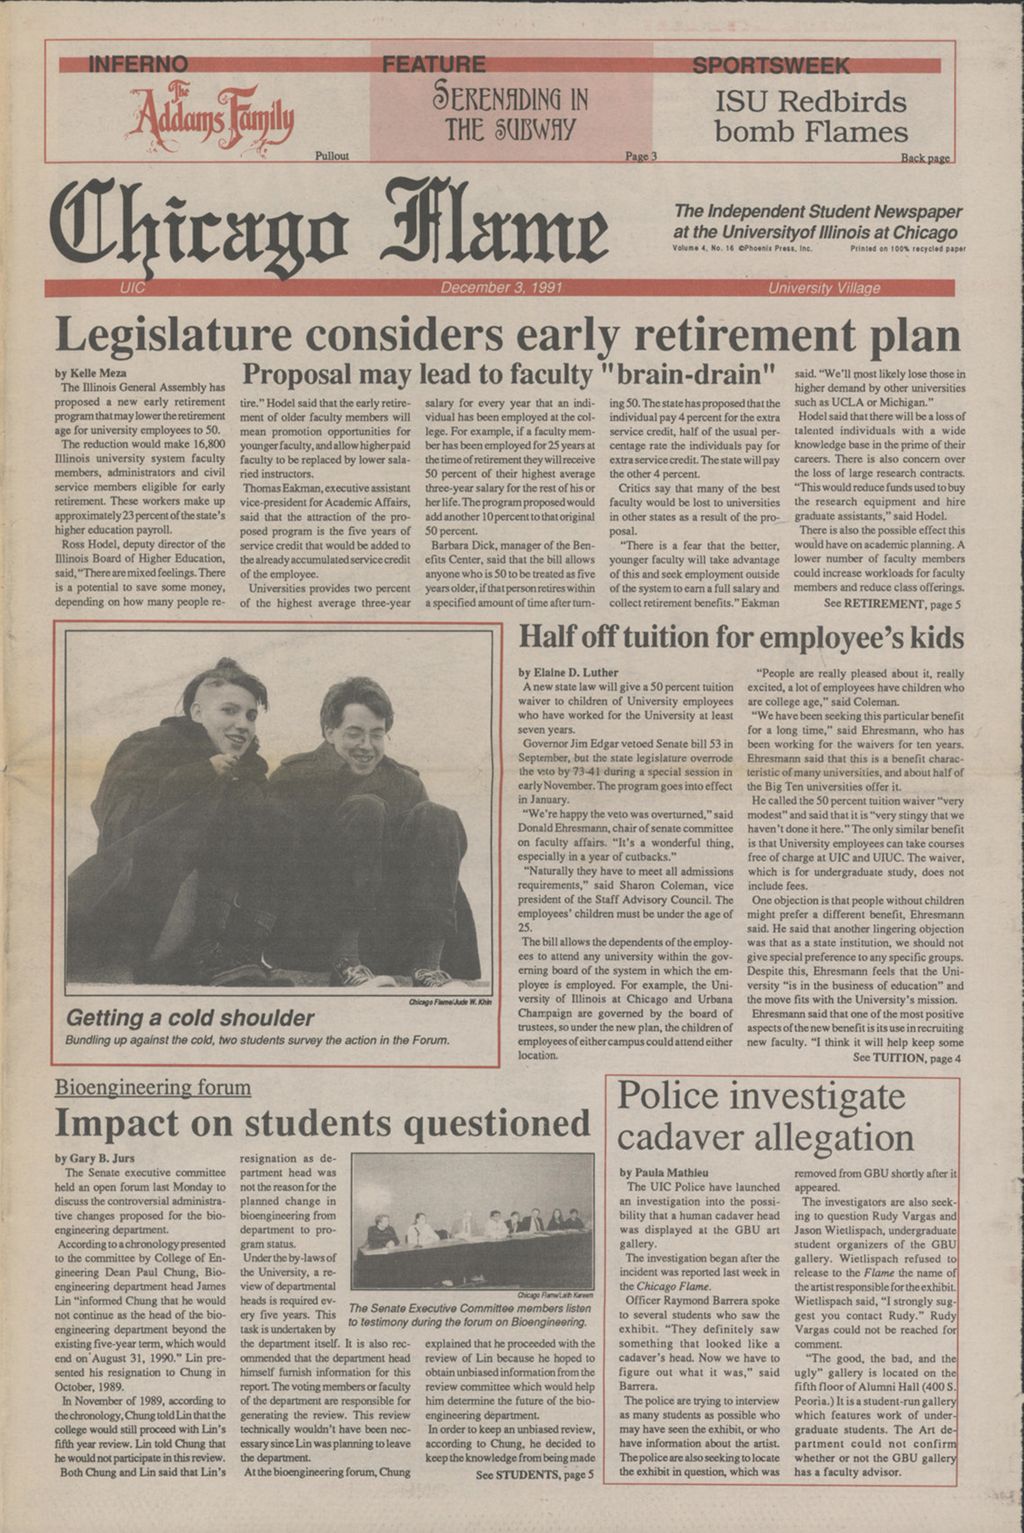 Chicago Flame (December 3, 1991)